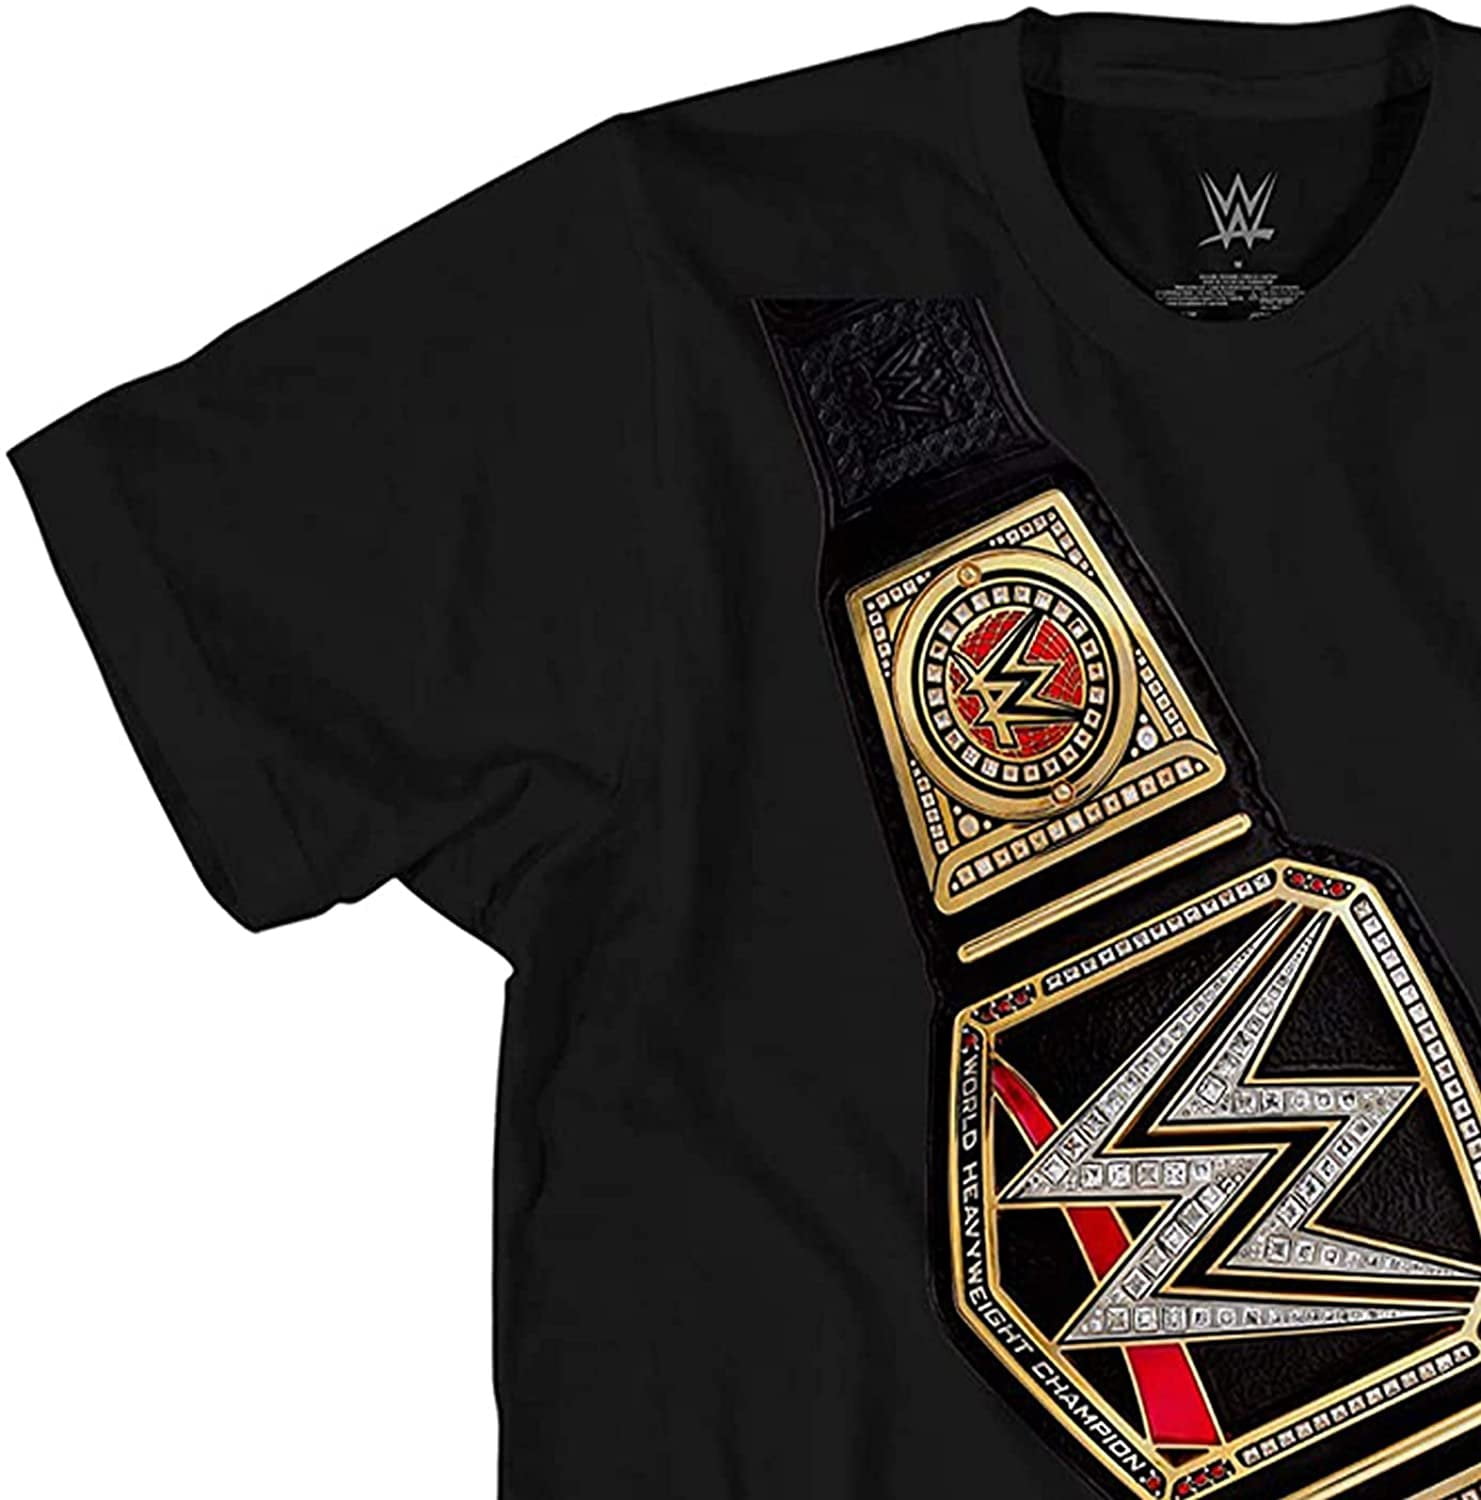  Men's WWE Championship Belt T-Shirt - Black - Small : Clothing,  Shoes & Jewelry